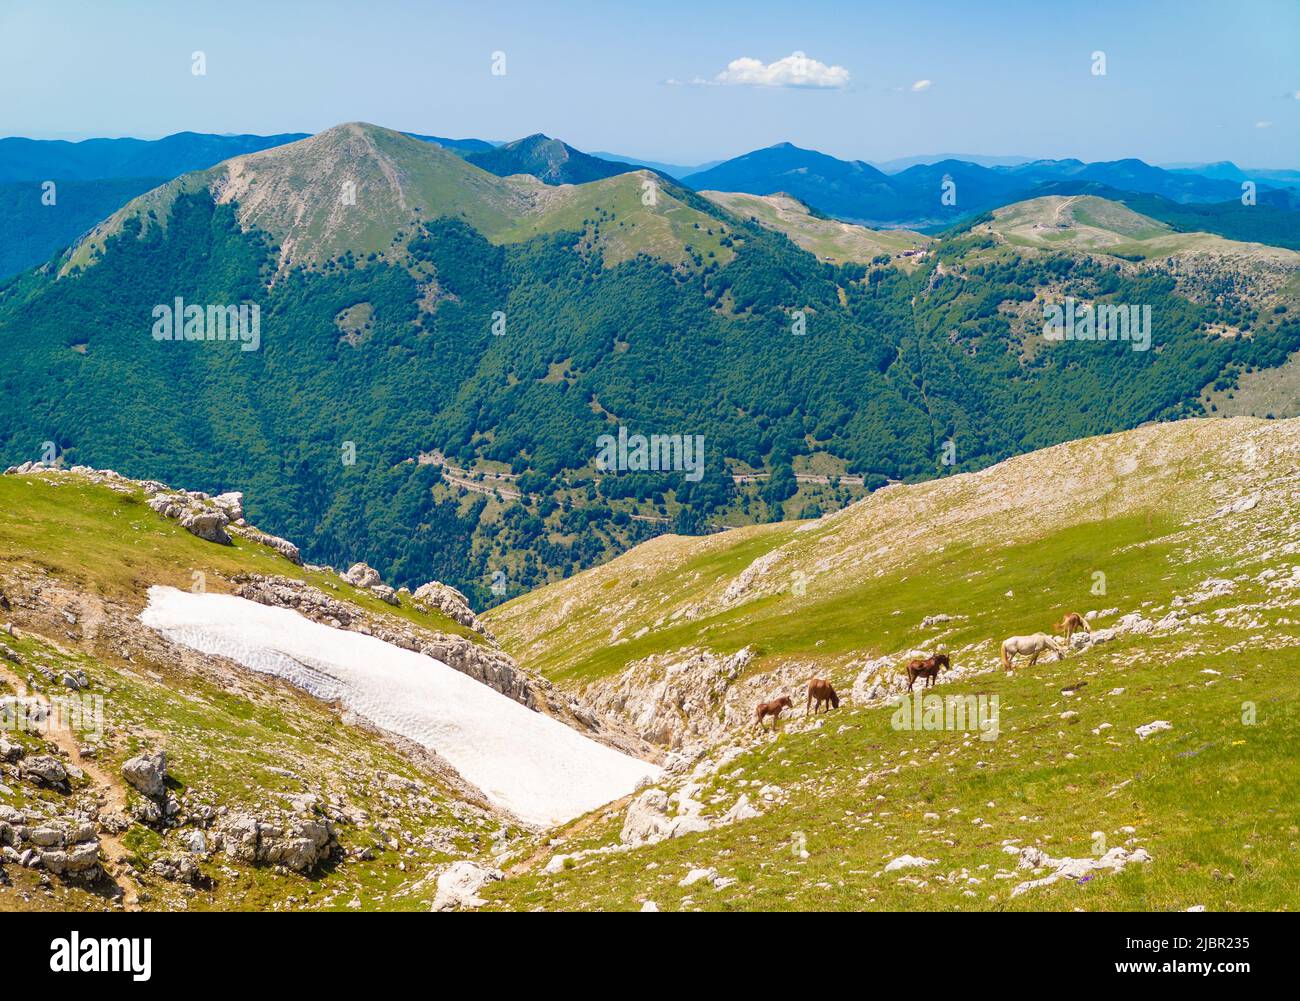 Mount Viglio (Frosinone, Italy) - In Monti Cantari mountain range, the Monte Viglio is one of three hightest peak in Lazio region. Here in the spring. Stock Photo